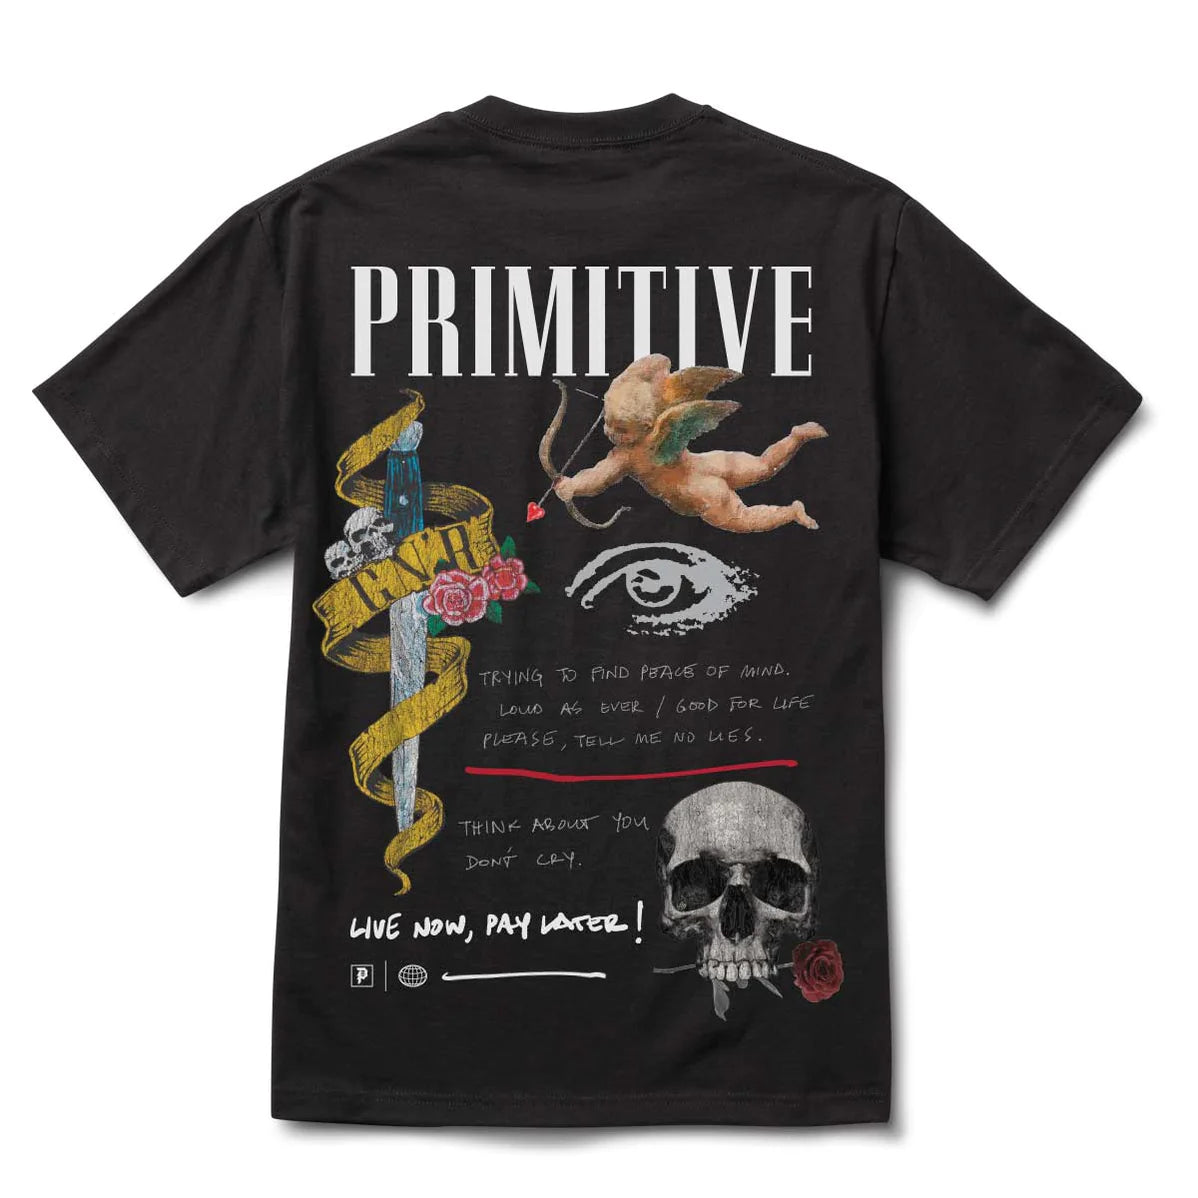 Primitive x Guns N' Roses: Don't Cry Tee (Black)